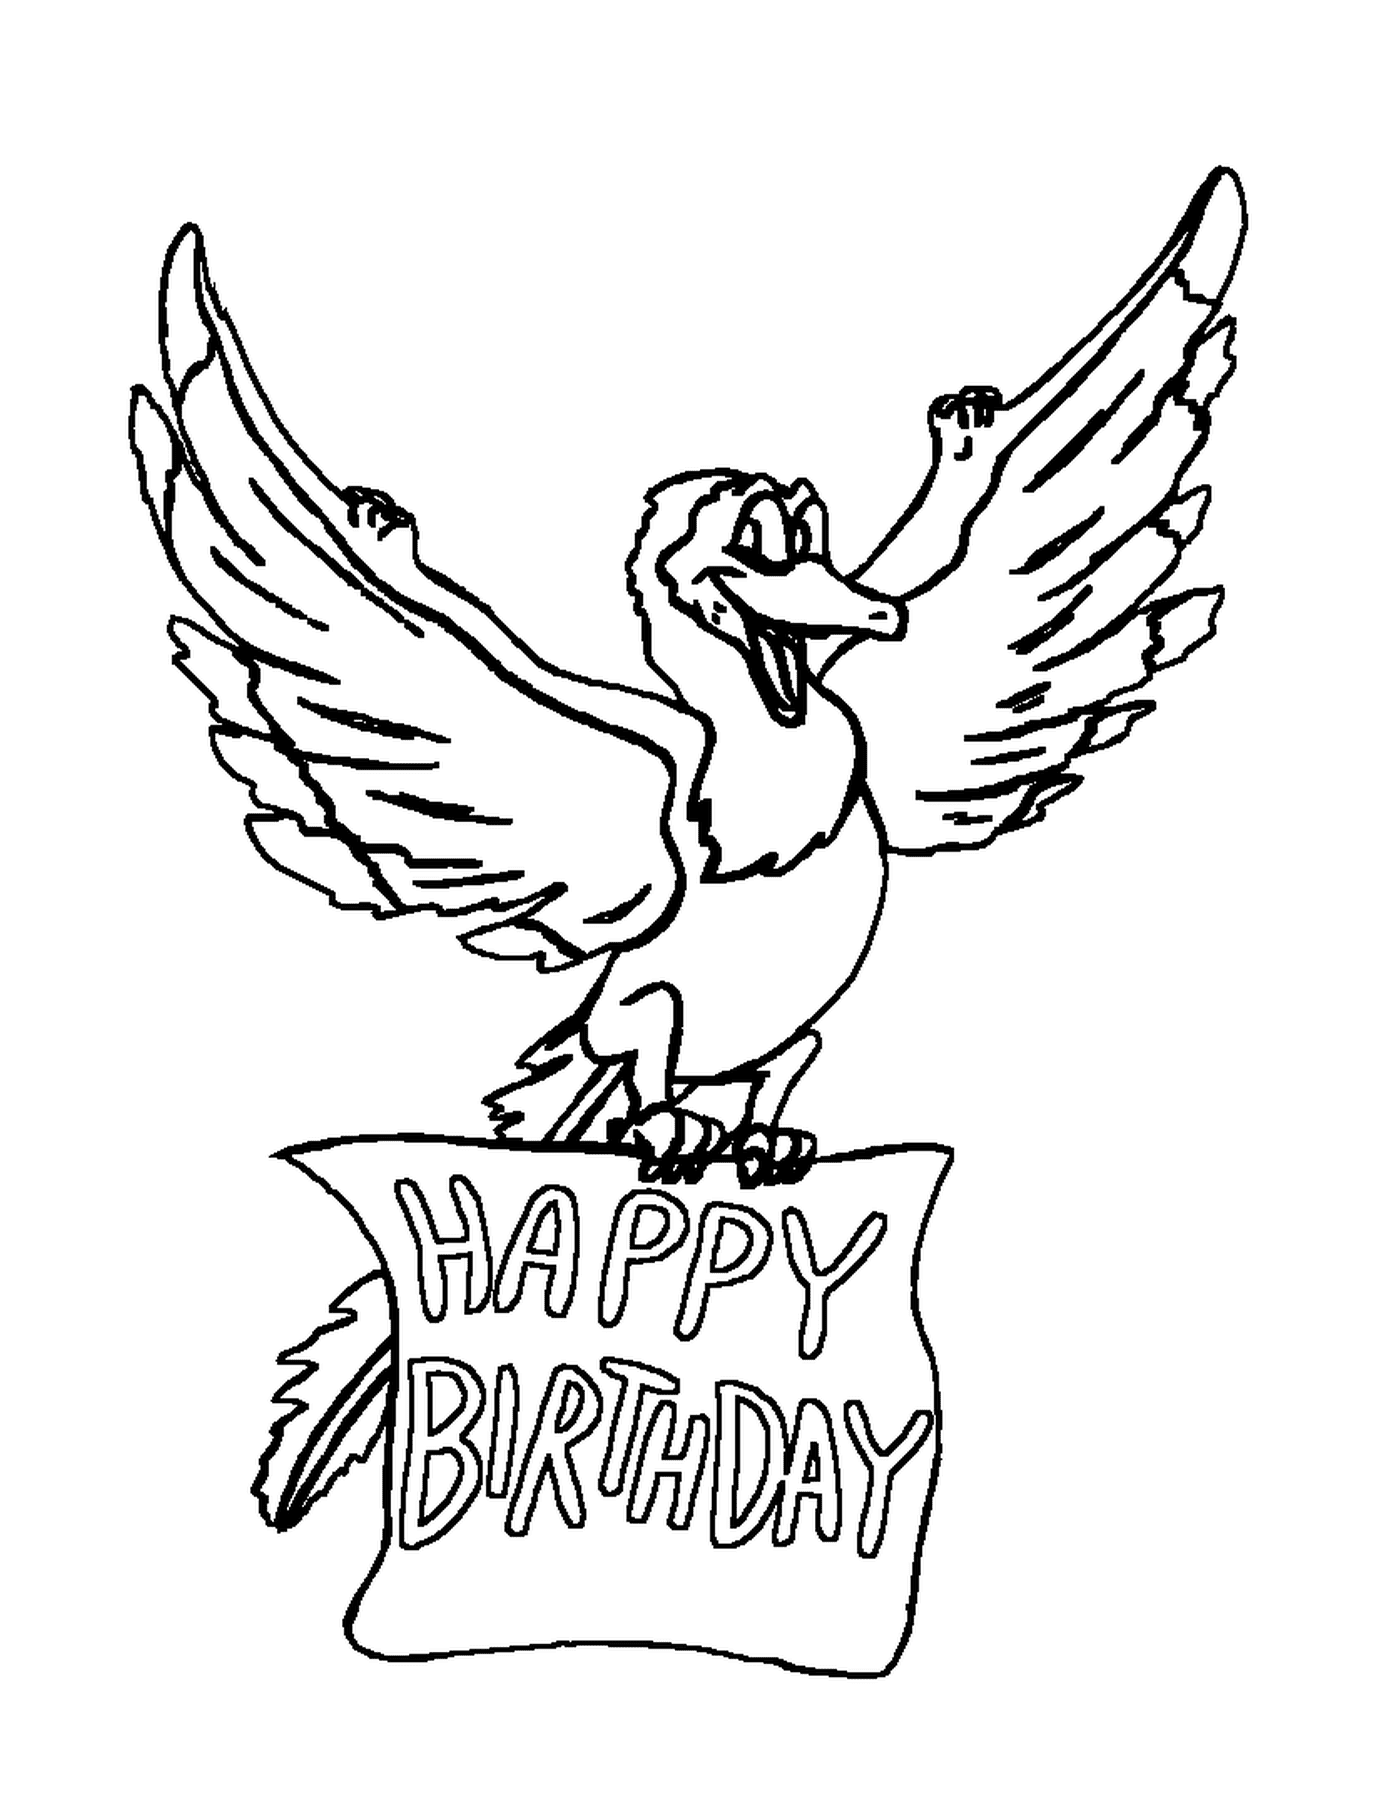  Bird with a Happy Birthday sign 